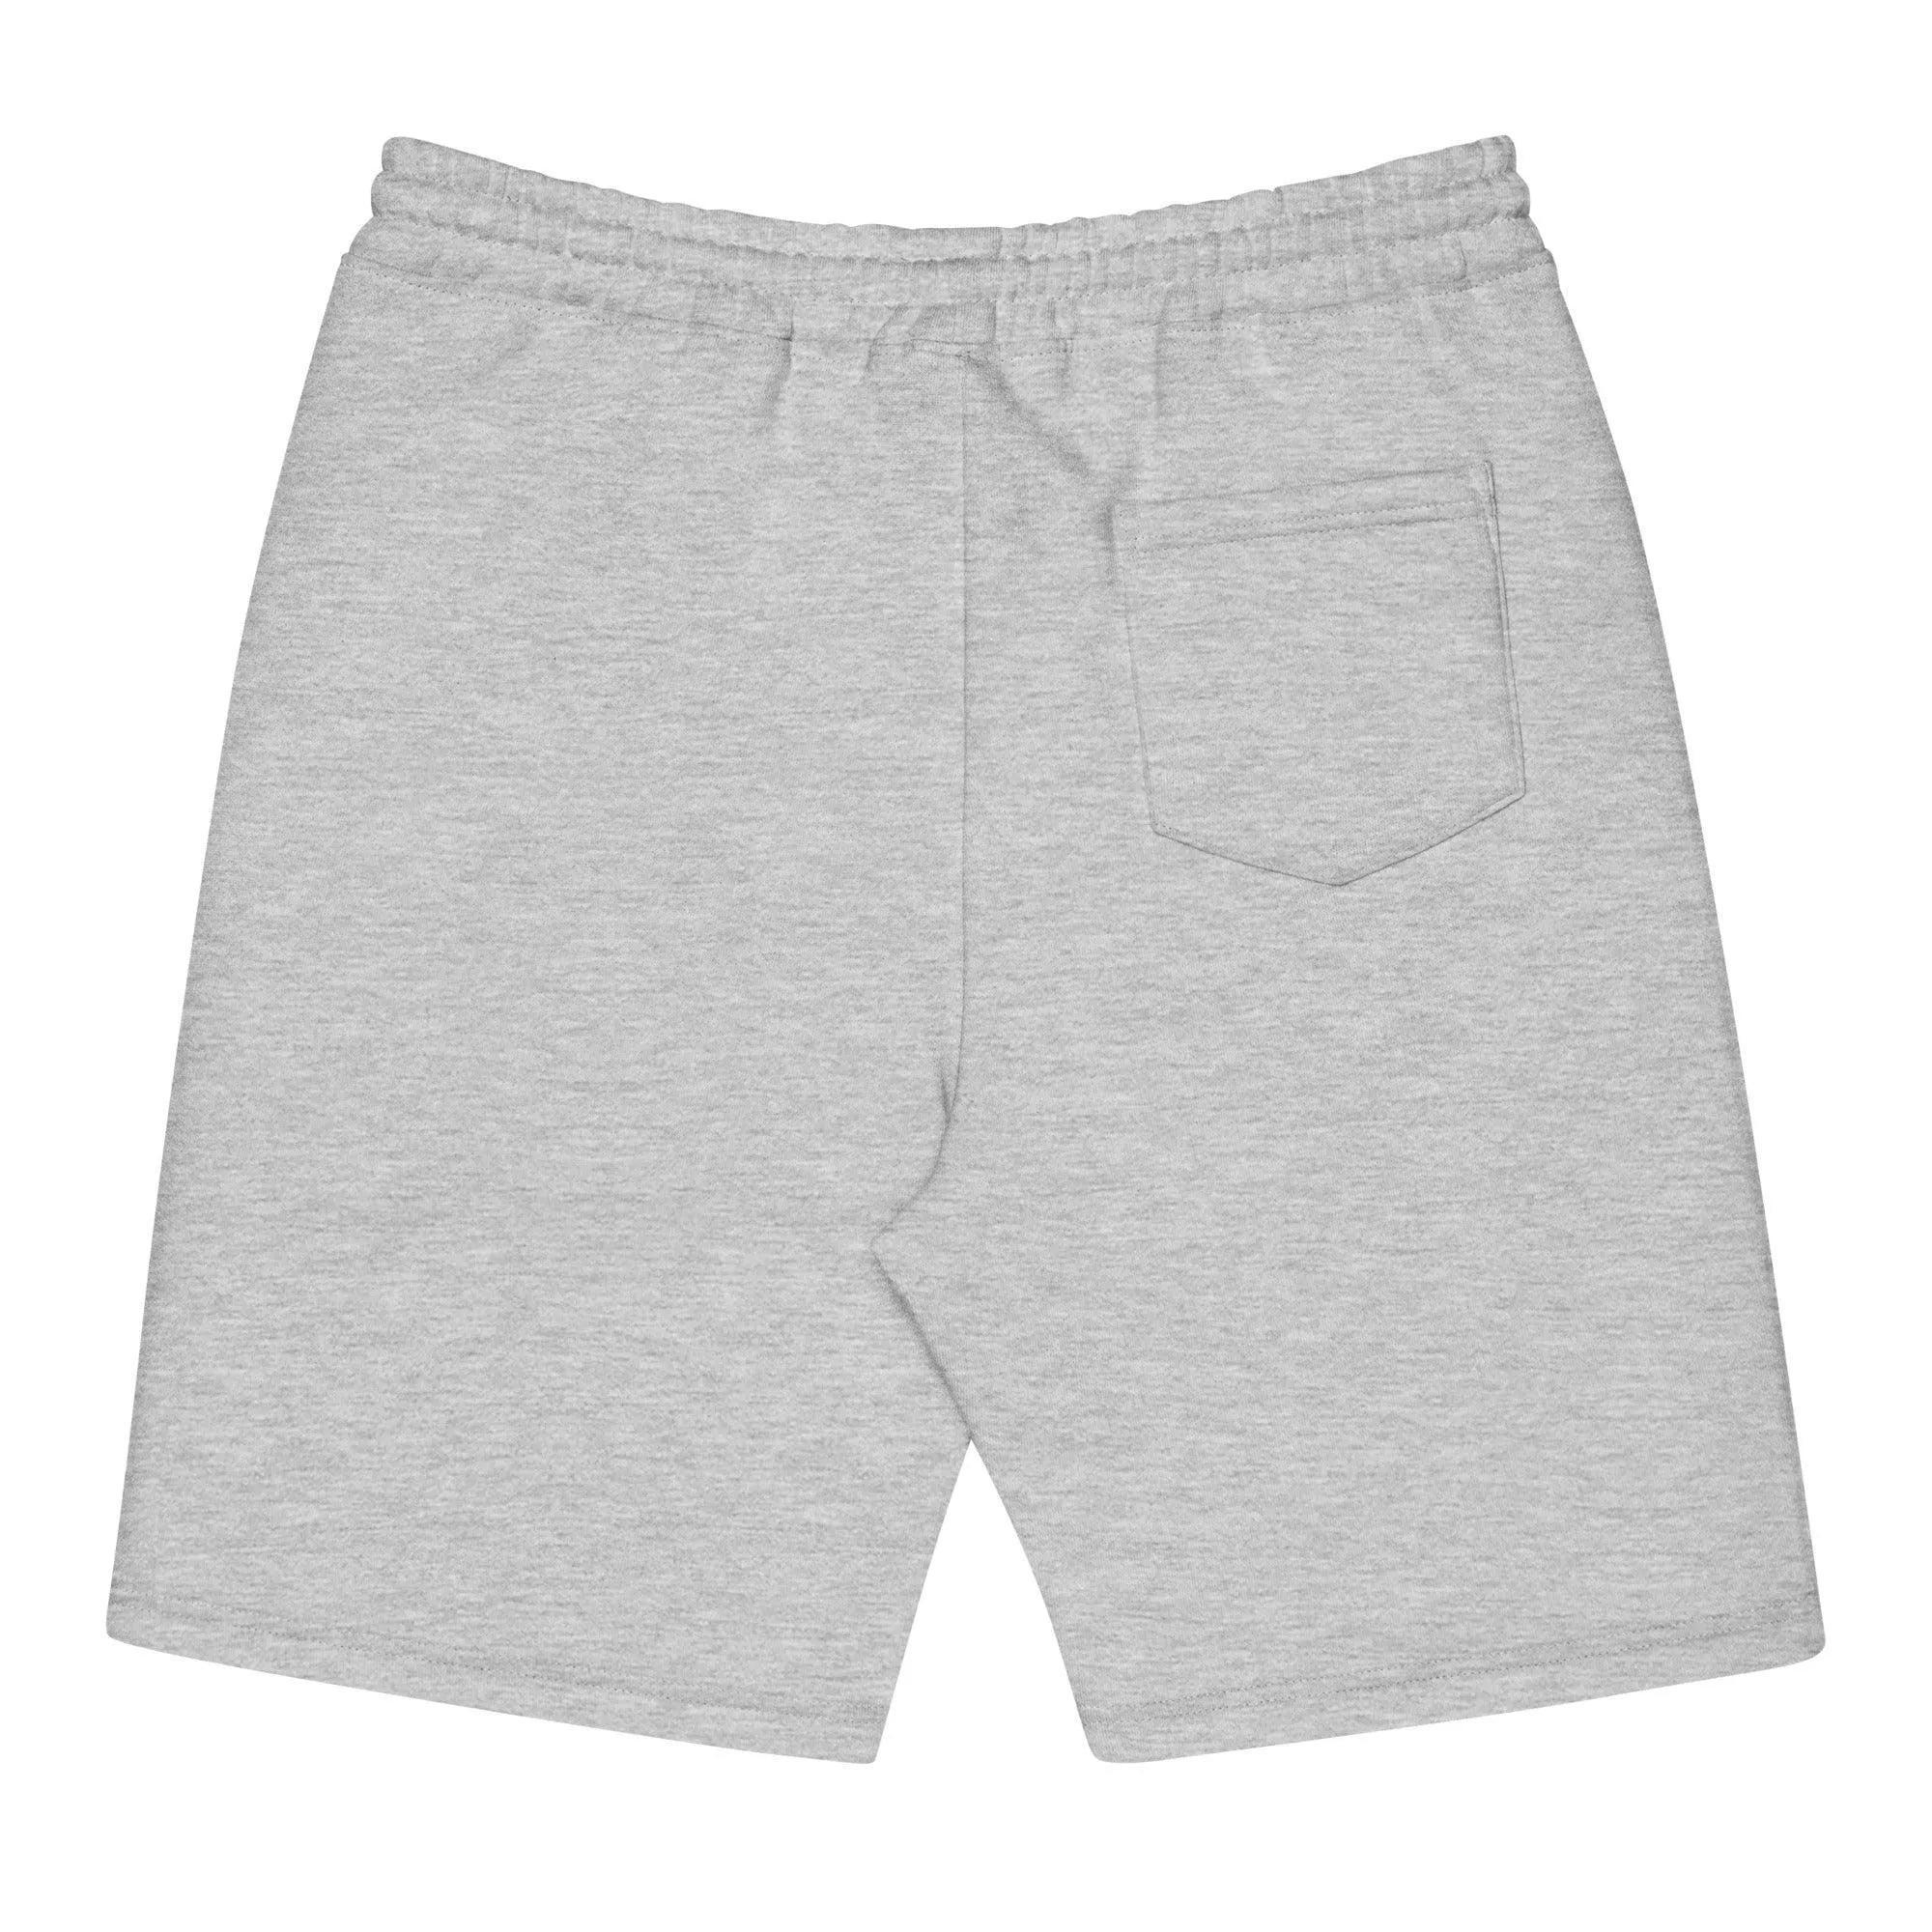 ZCash 2 Fleece Shorts - InvestmenTees